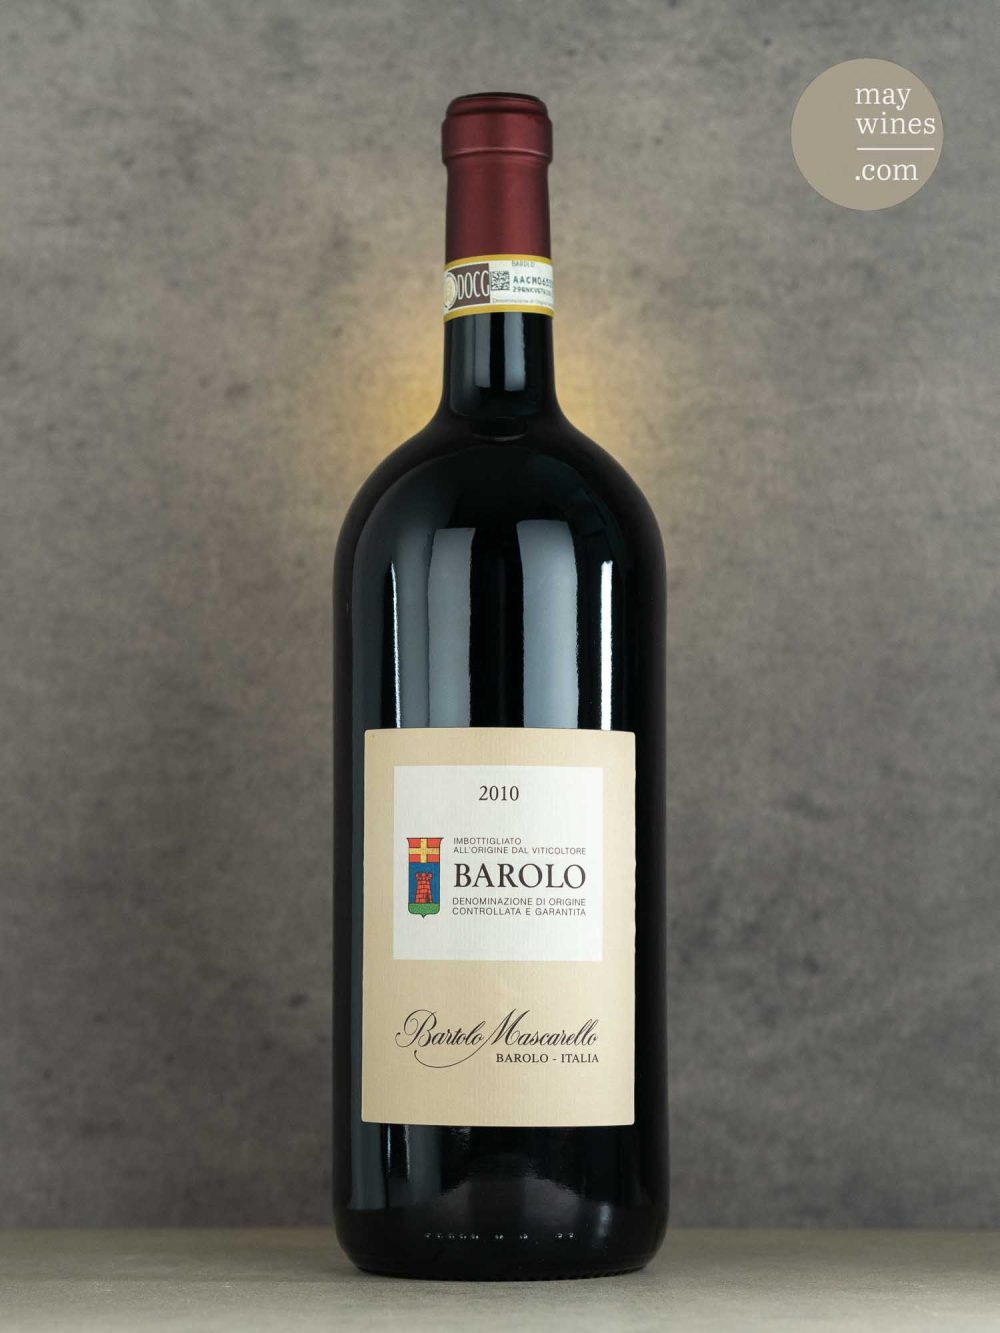 May Wines – Rotwein – 2010 Barolo - Bartolo Mascarello